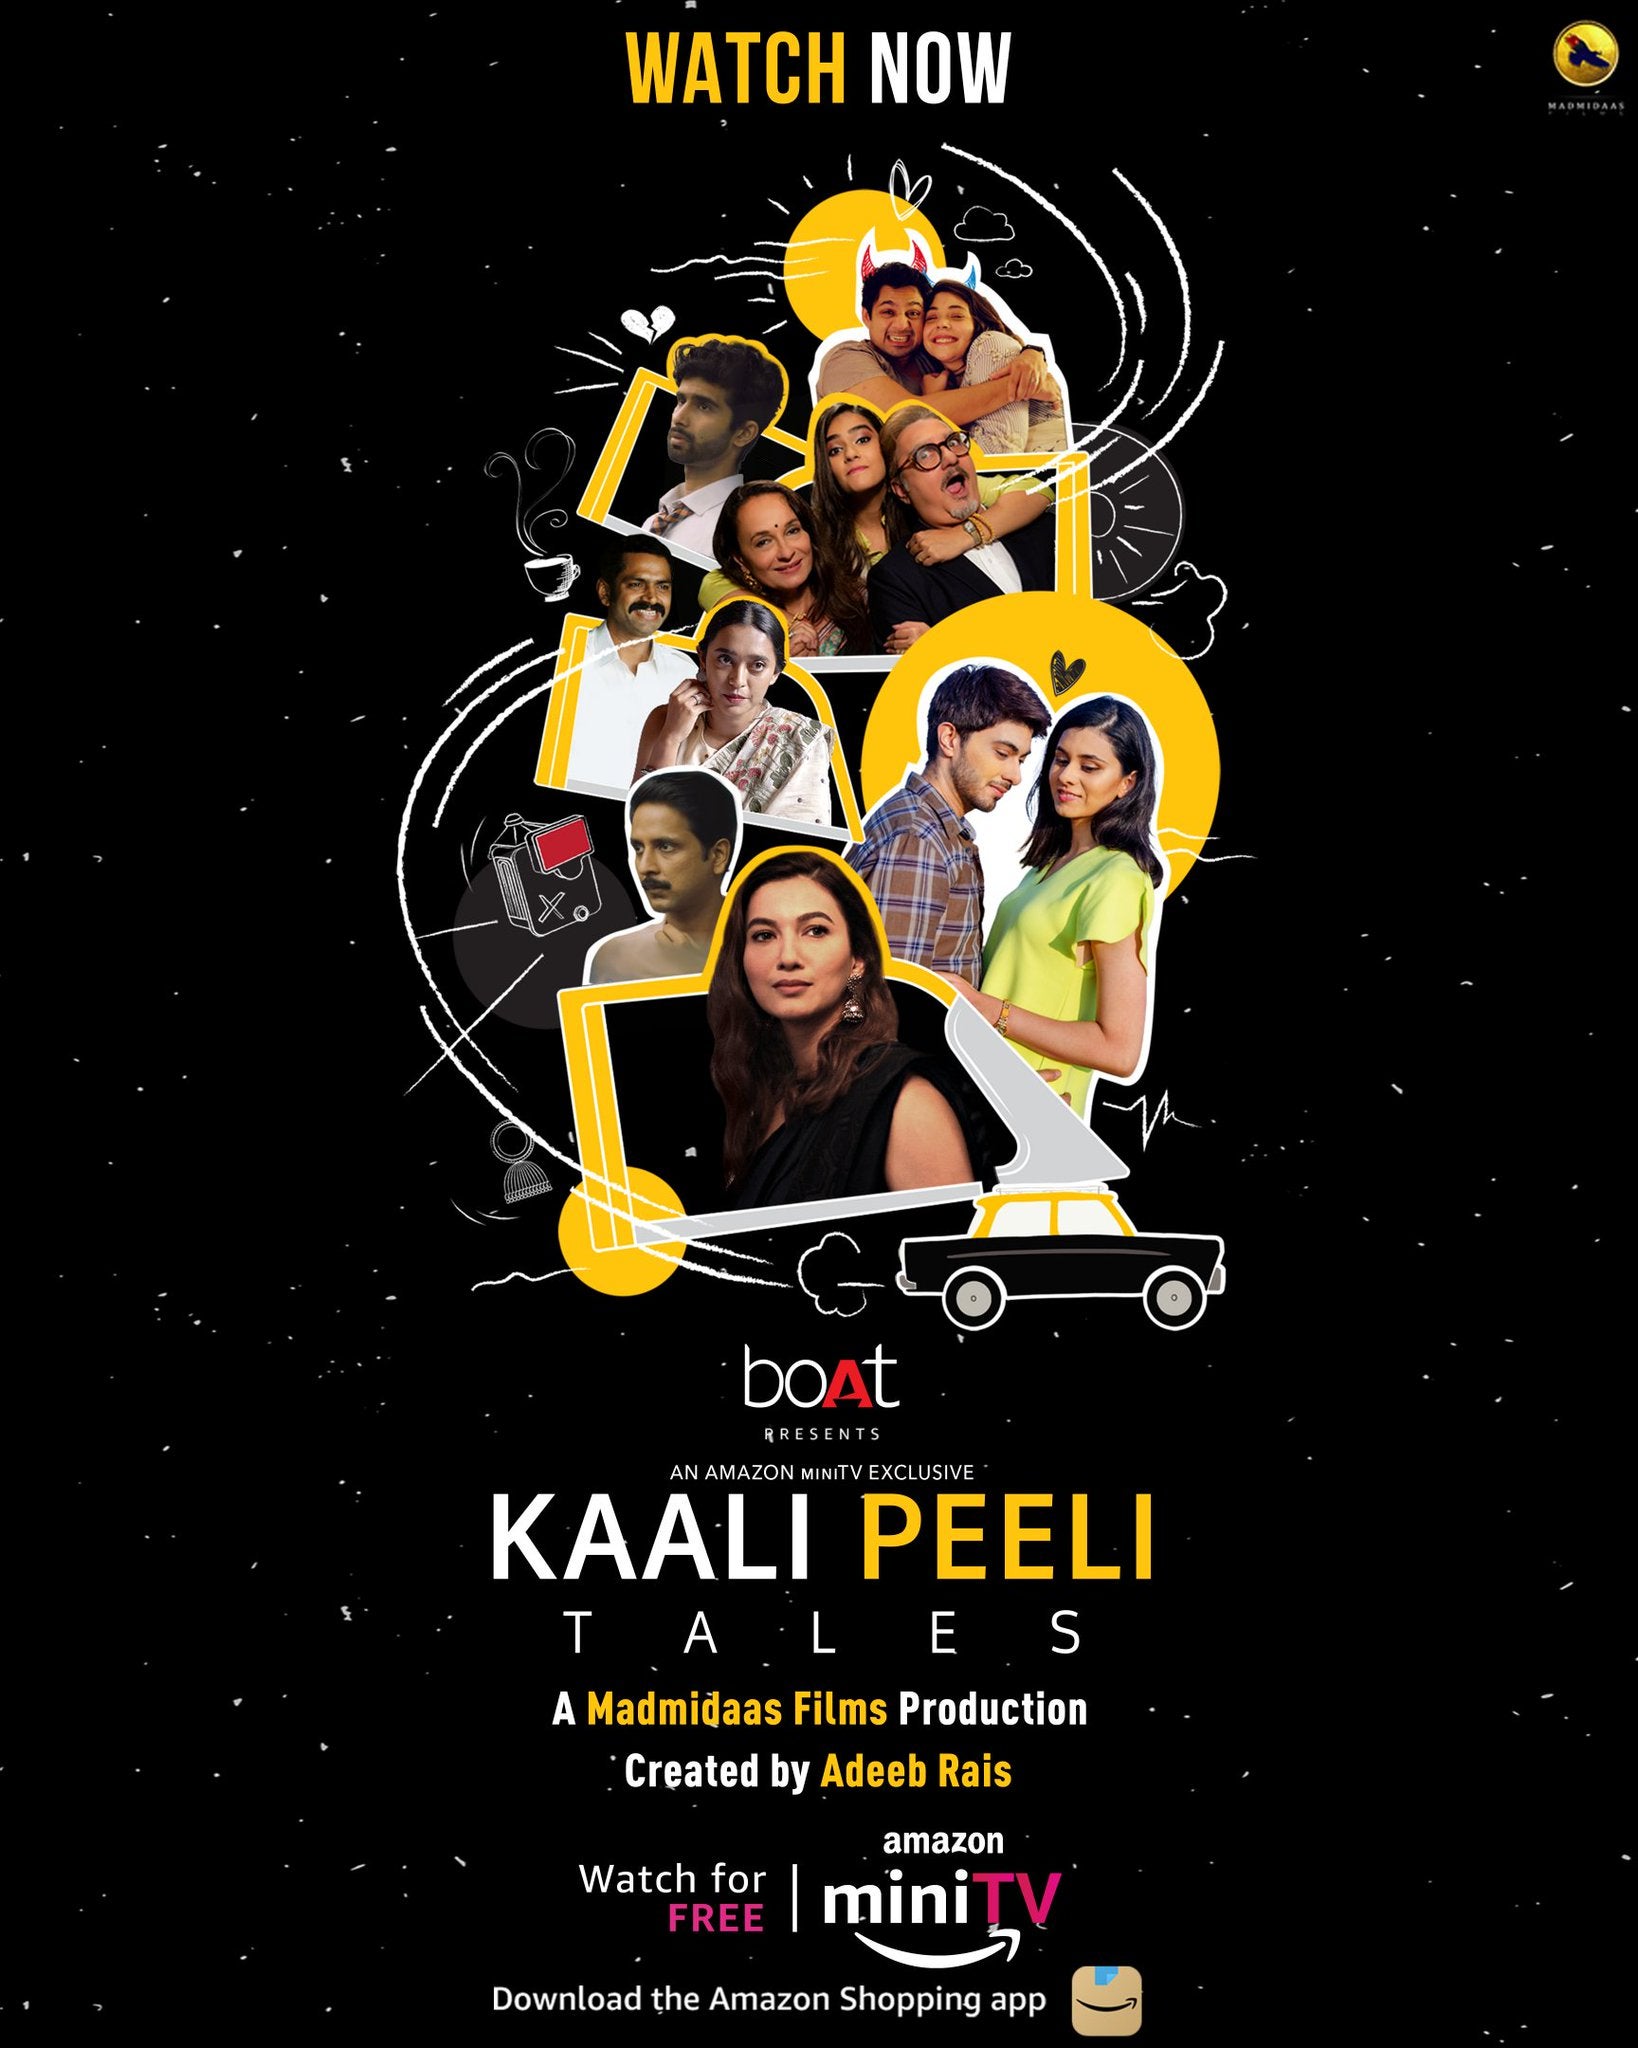 TV ratings for Kaali Peeli Tales in India. Amazon mini TV TV series